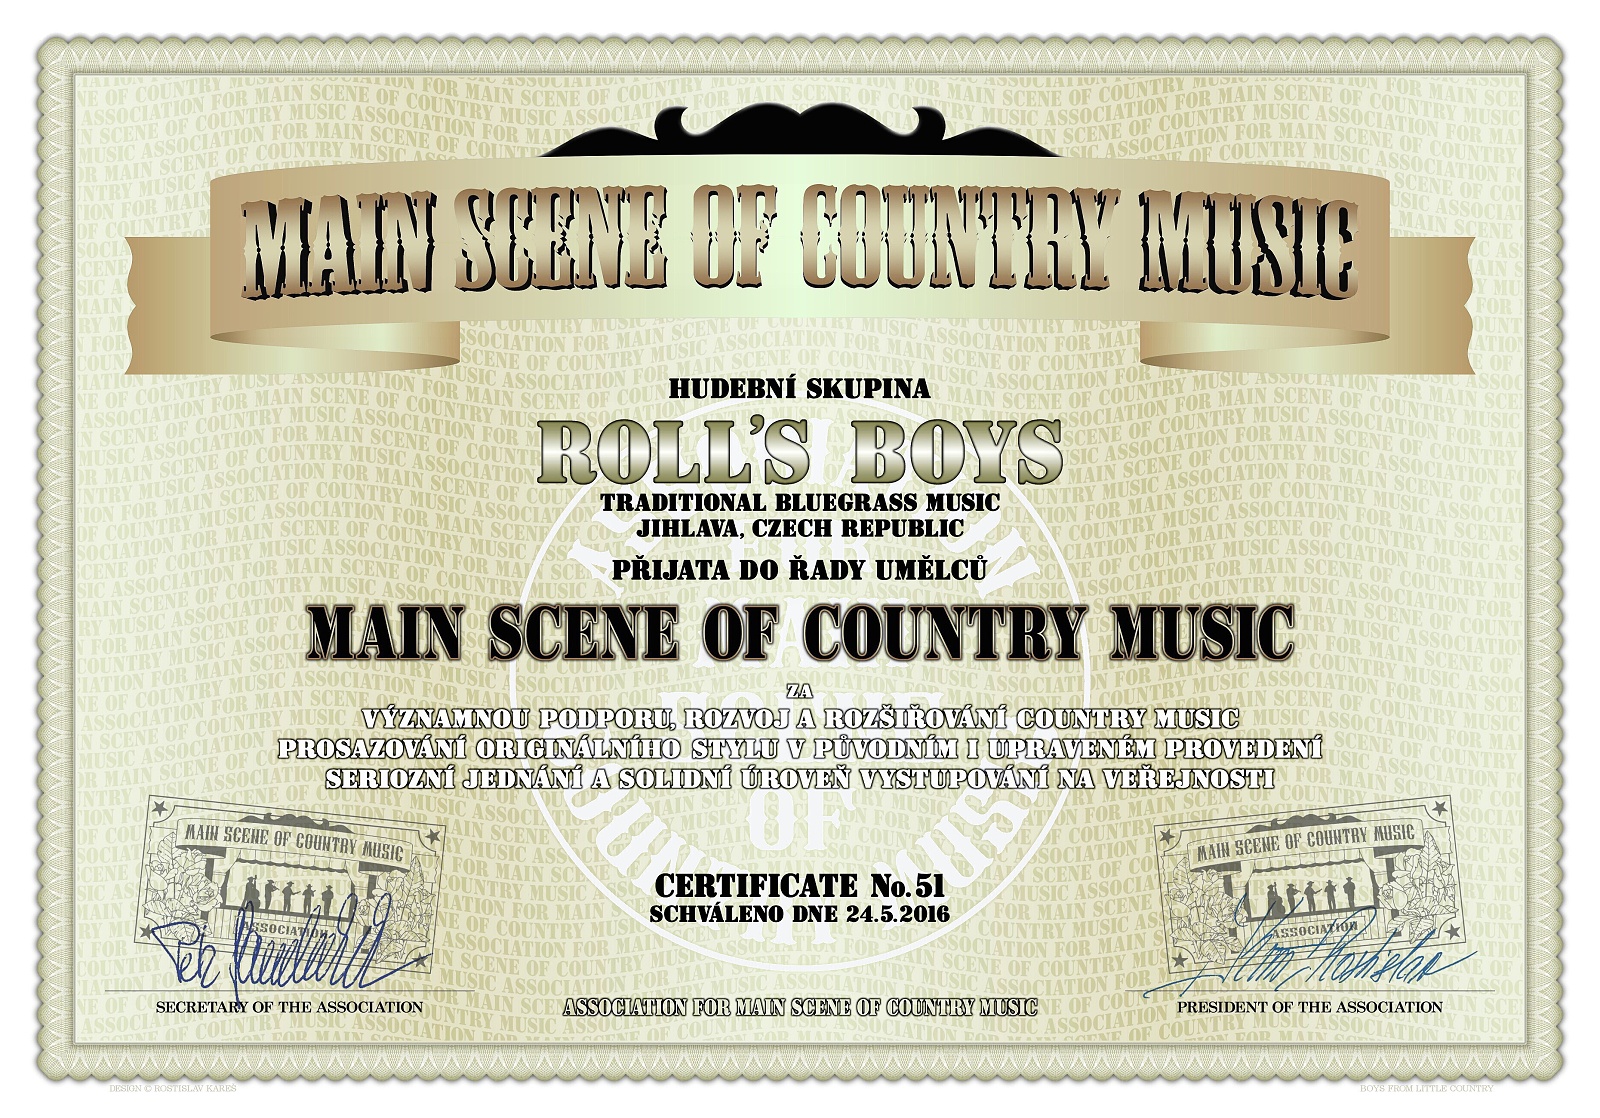 CE 51 - Main Scene of Country Music